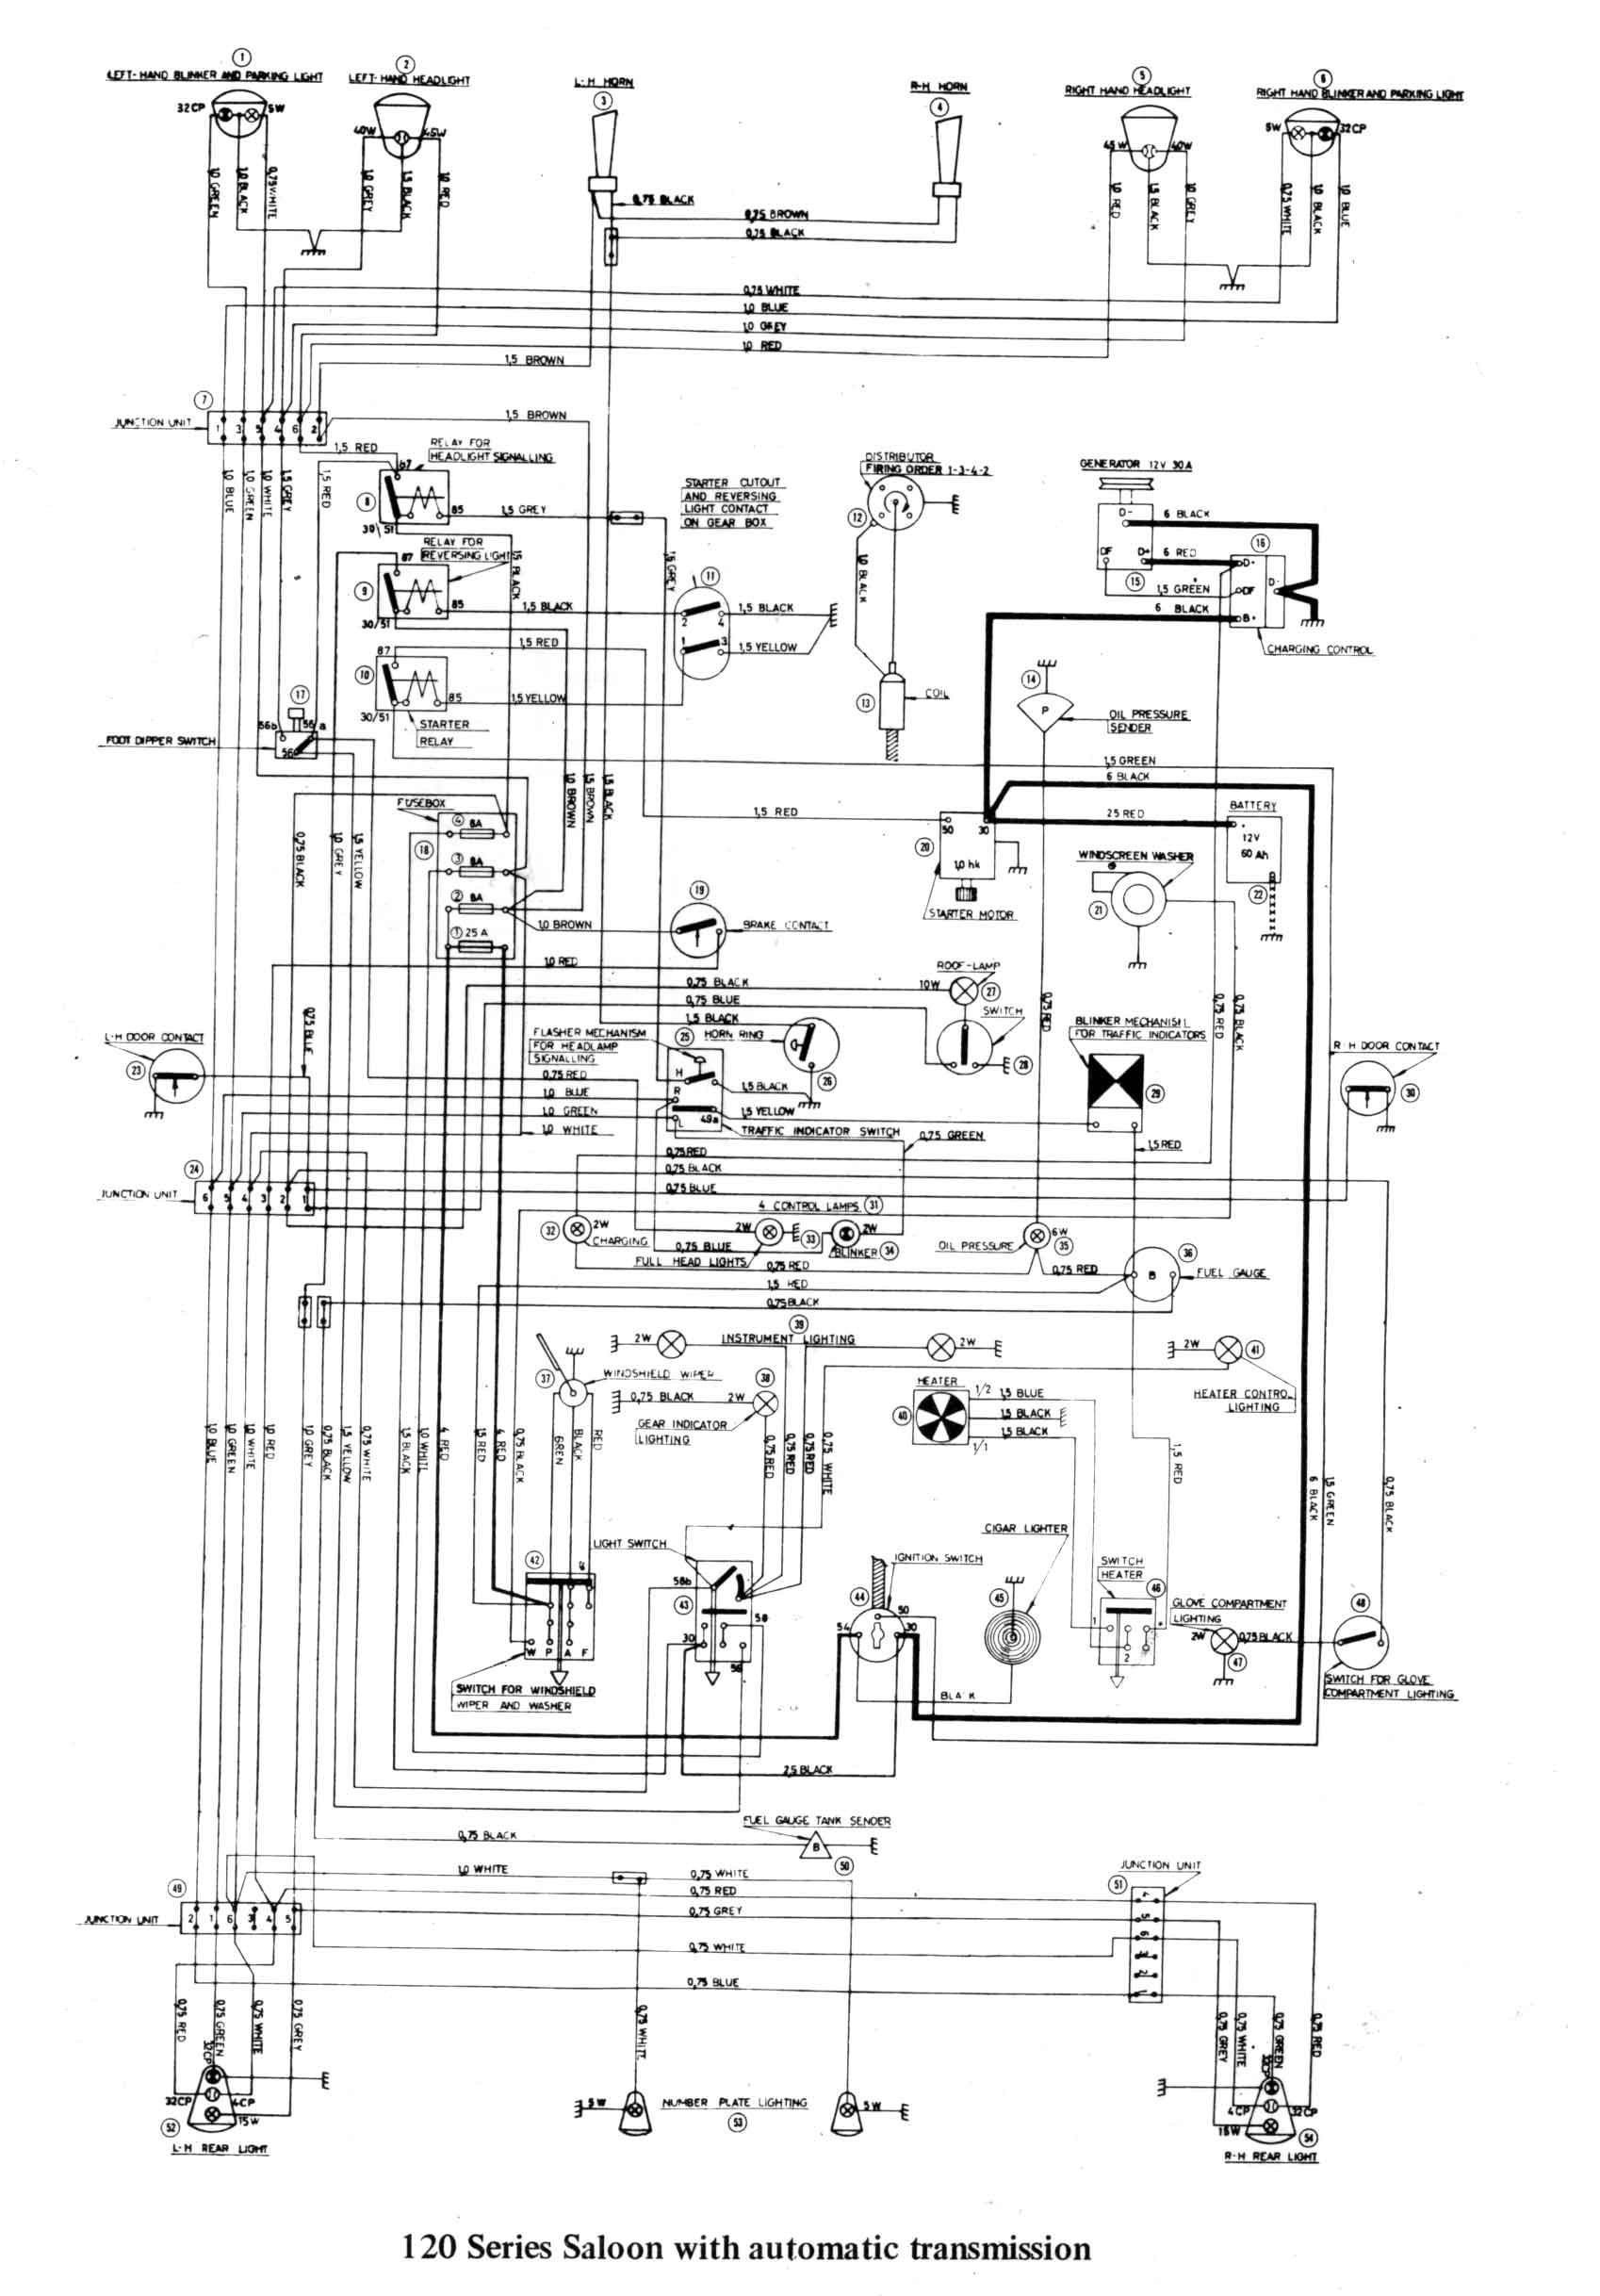 Starter Generator Wiring Diagram Club Car New Wiring Diagrams For Yamaha Golf Carts Valid Ezgo Wiring Diagram